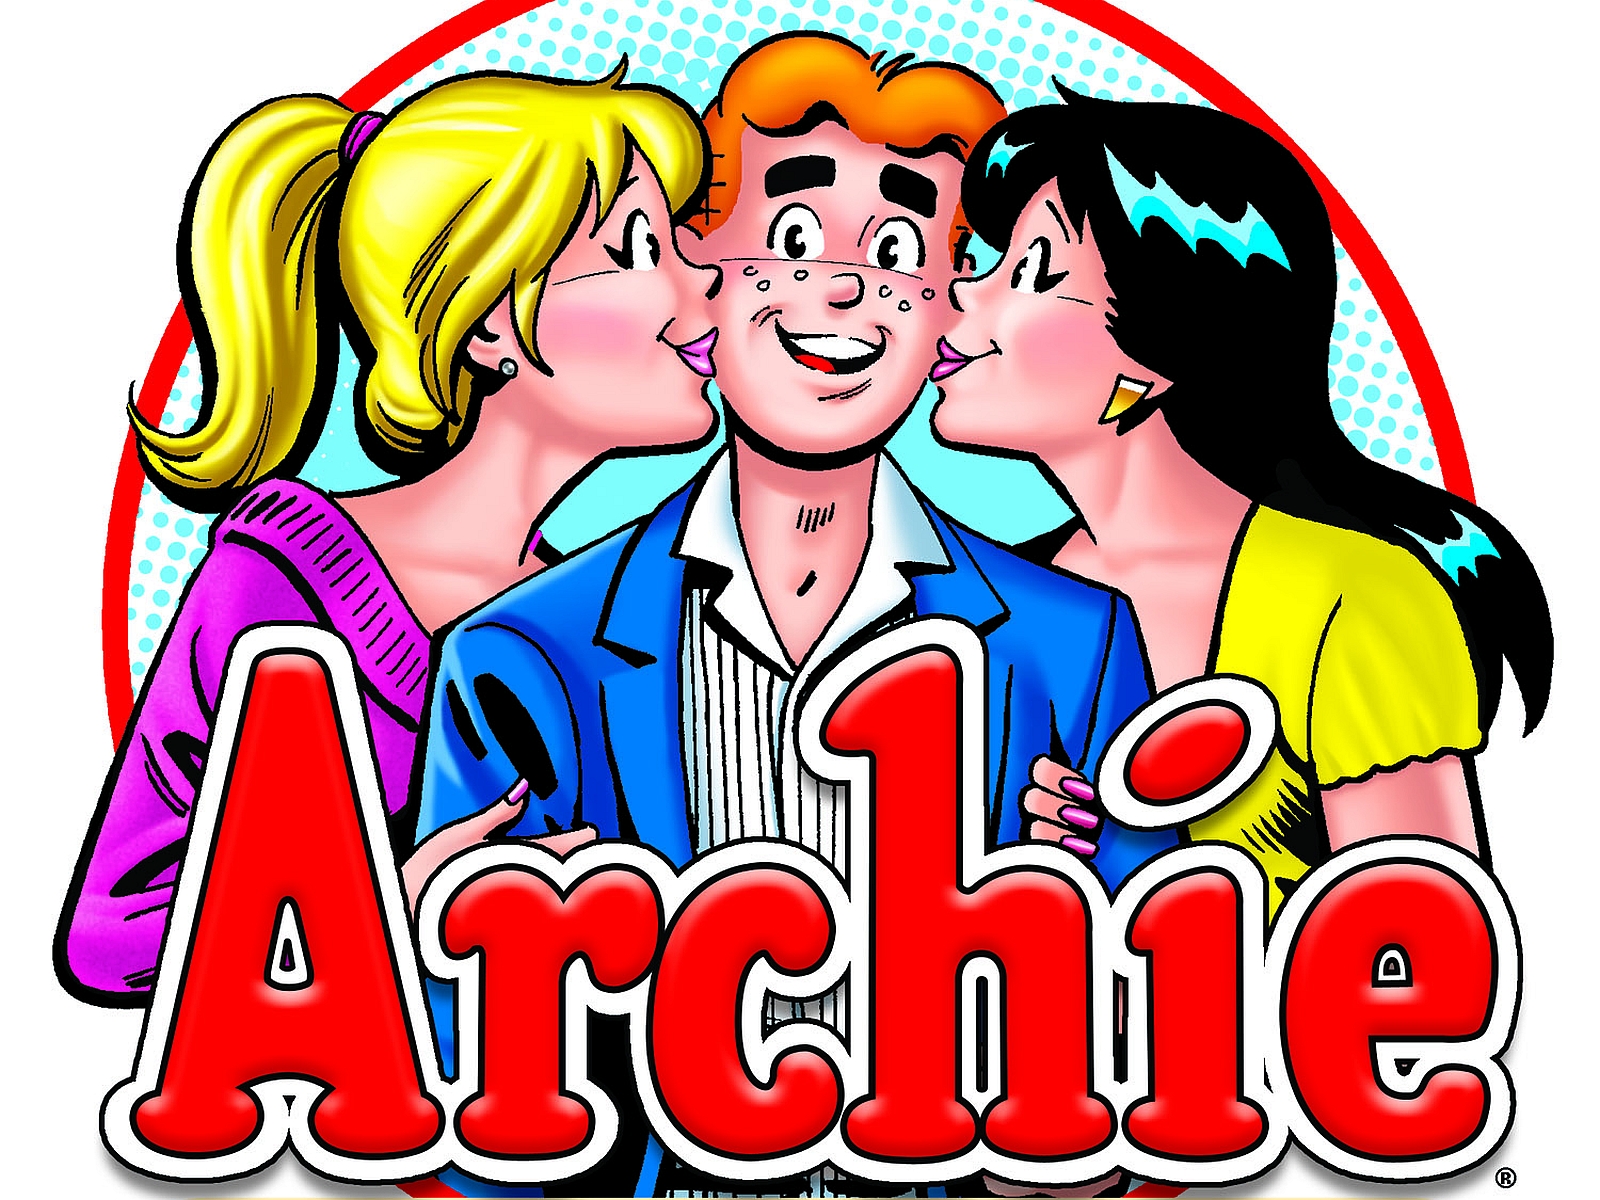 comics, archie, archie andrews, betty cooper, veronica lodge